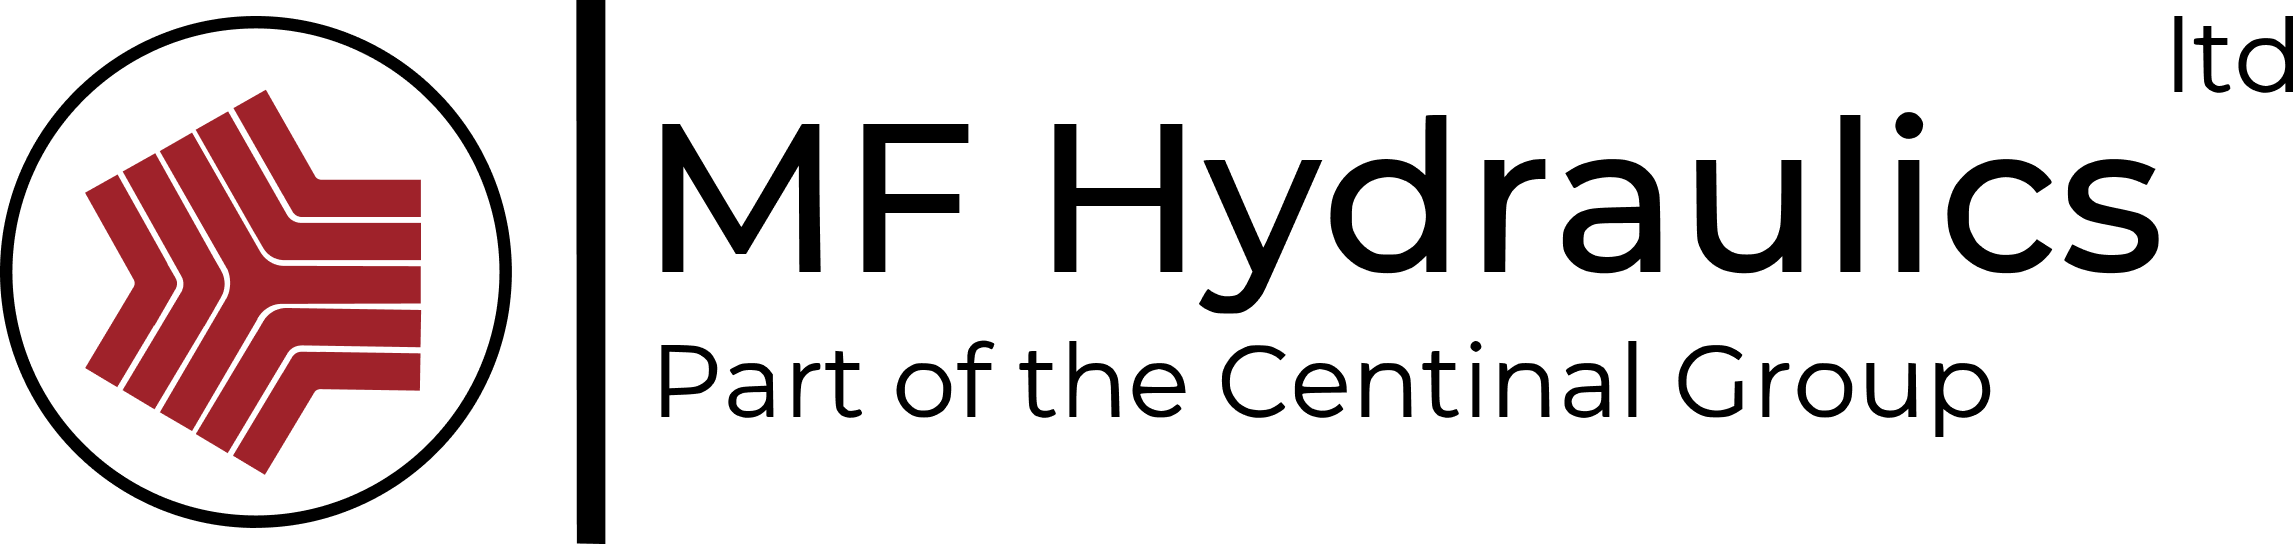 MF Hydraulics Ltd - Logo